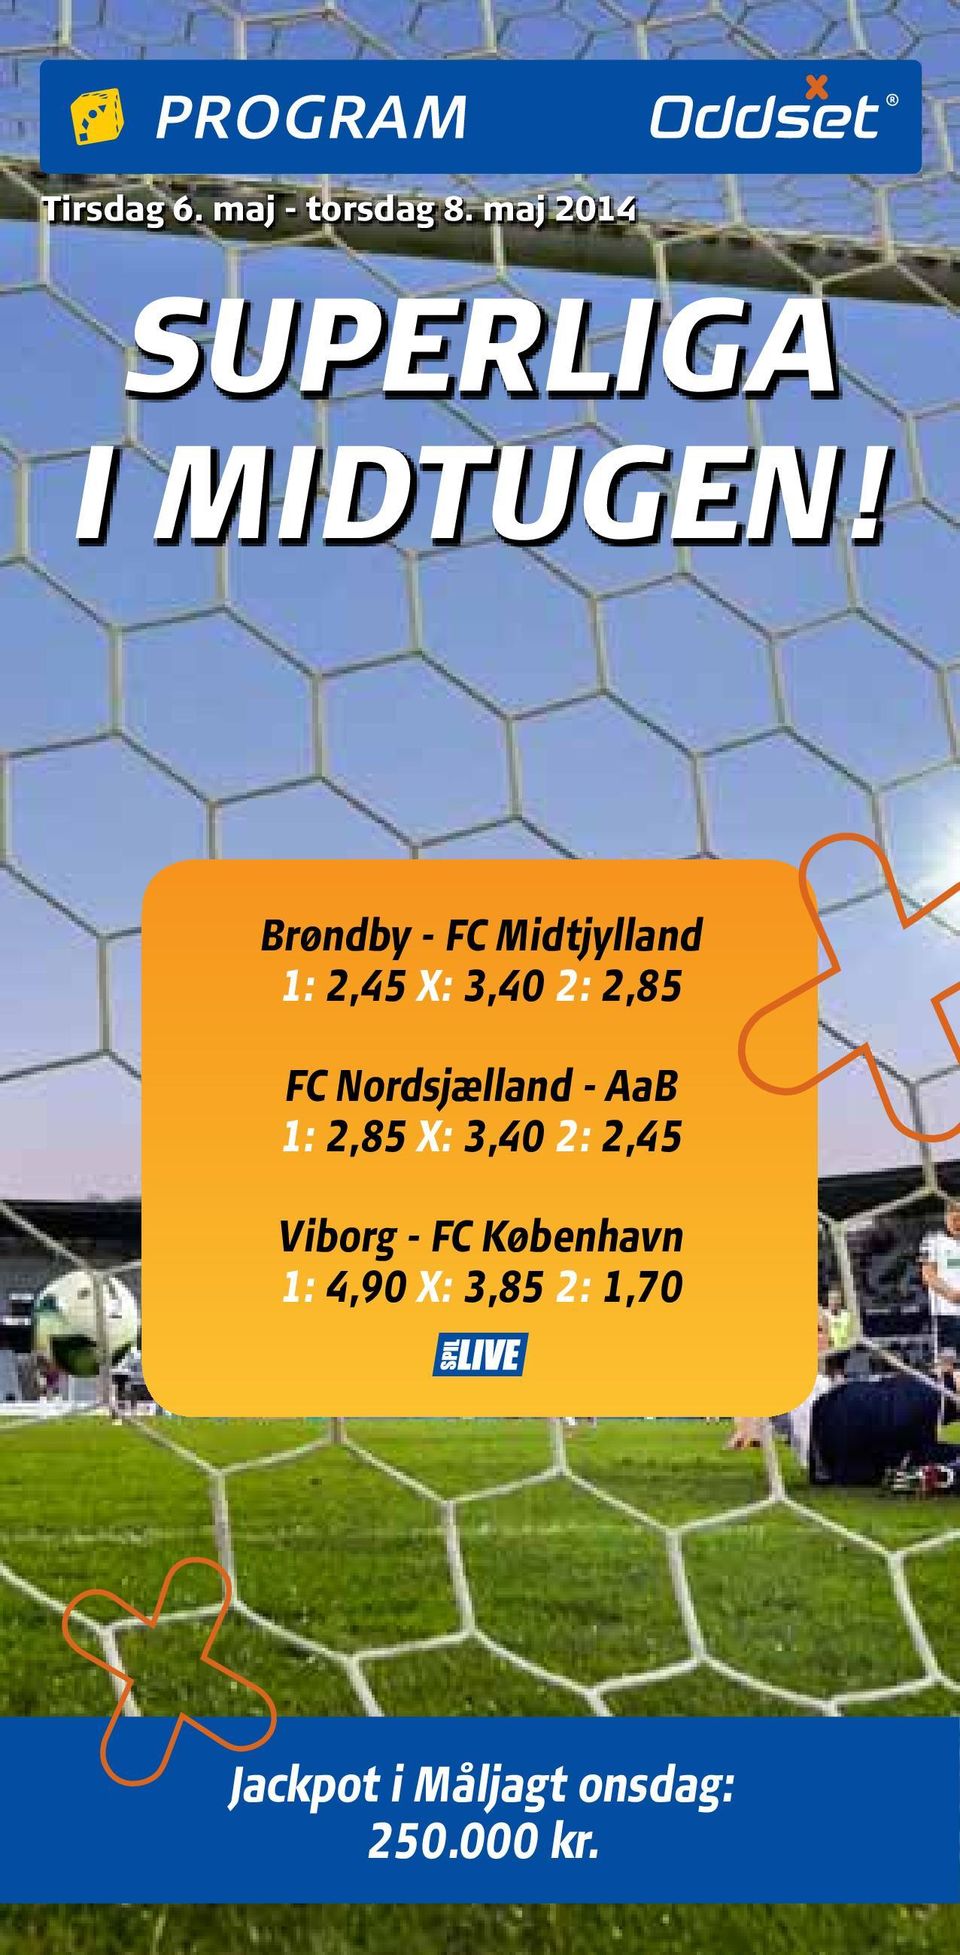 Nordsjælland AaB 1: 2,85 X: 3,40 2: 2,45 Viborg FC